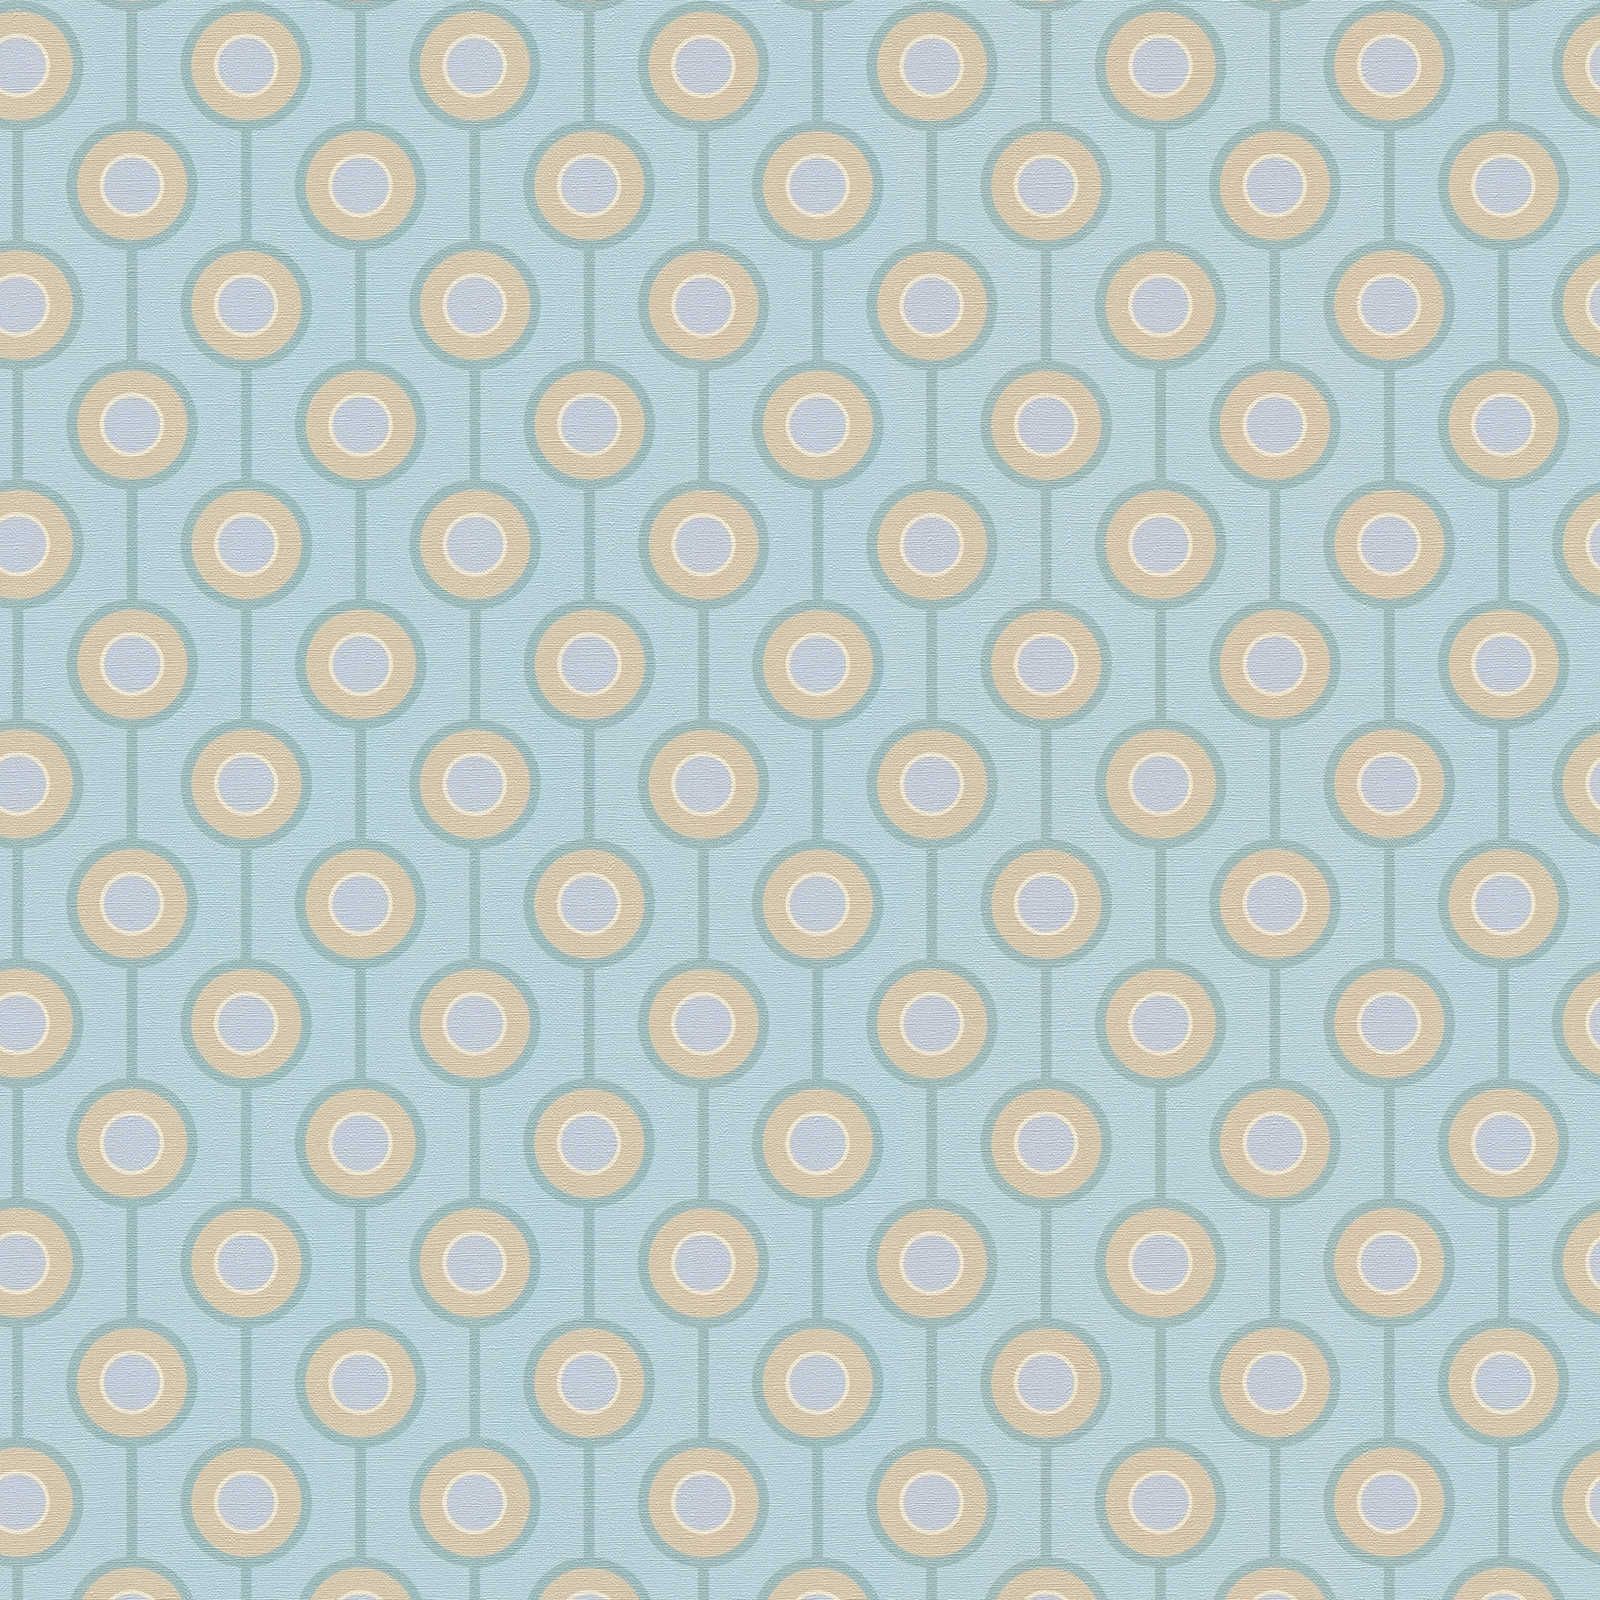 Papel pintado no tejido de textura ligera con motivos circulares retro - turquesa, azul, beige
